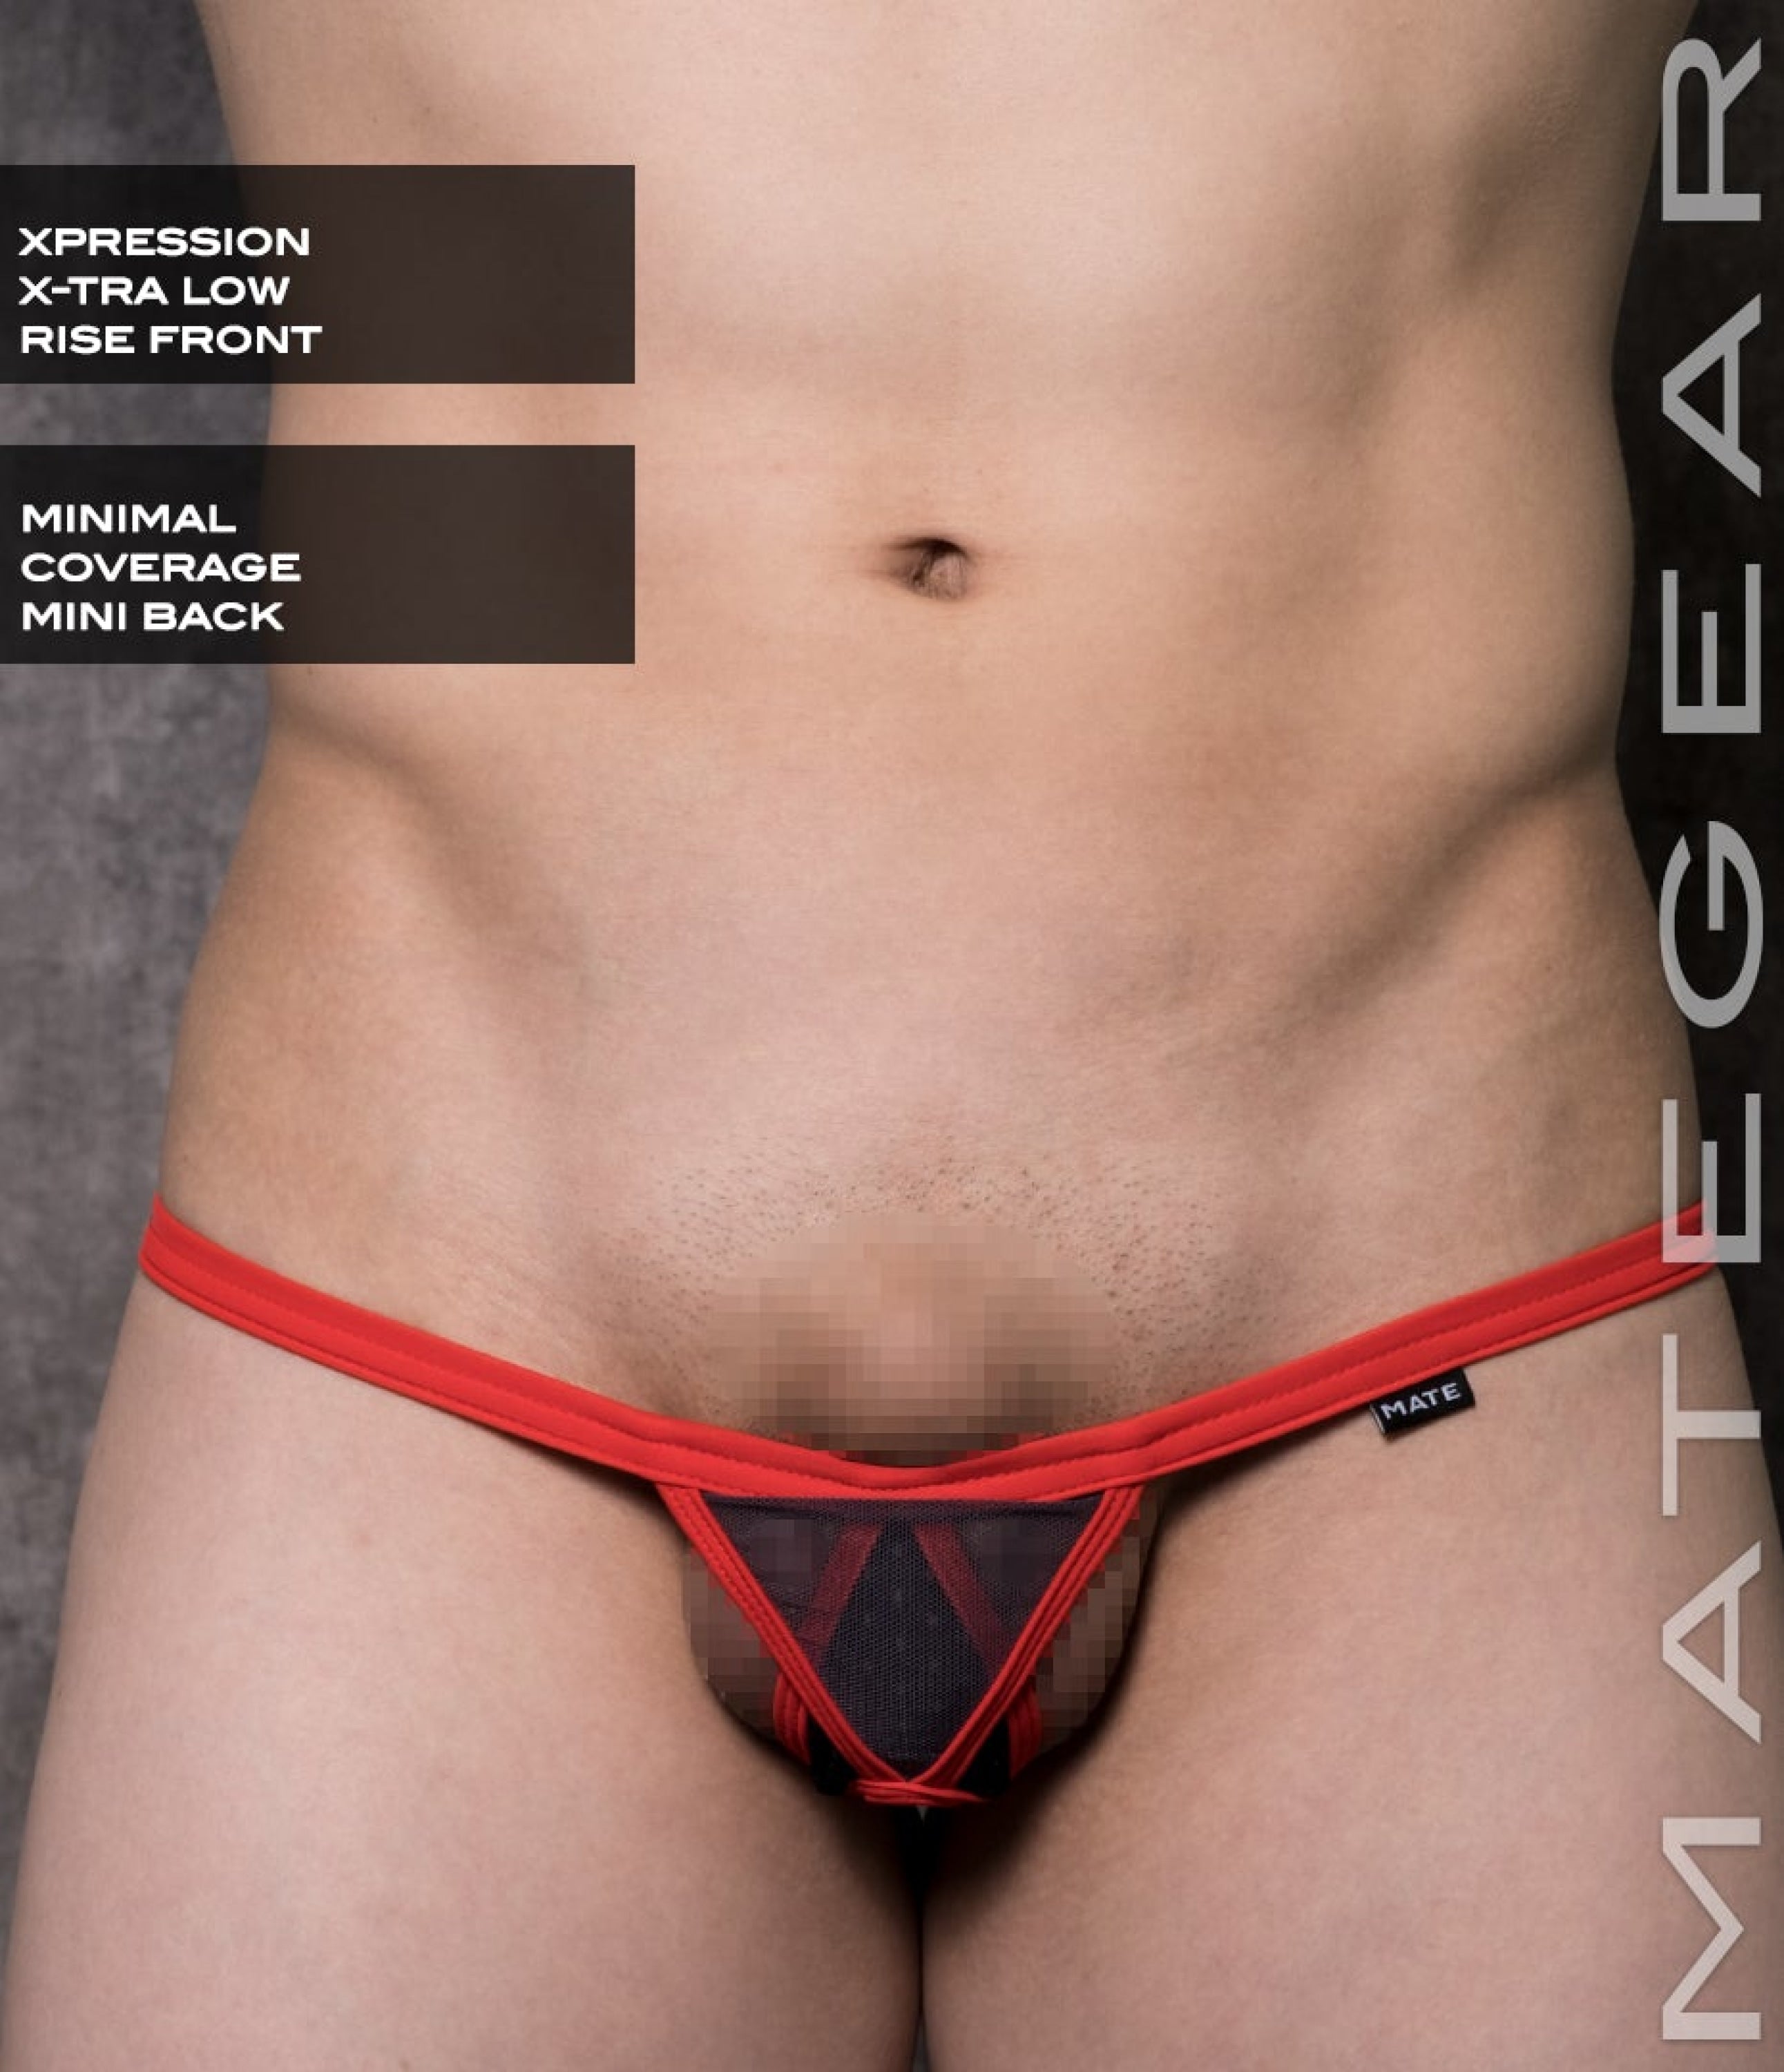 Sexy Mens Underwear Xpression Mini Bikini - Sun Hi (X-Tra Low Rise Front) Red Band / Grey Mesh